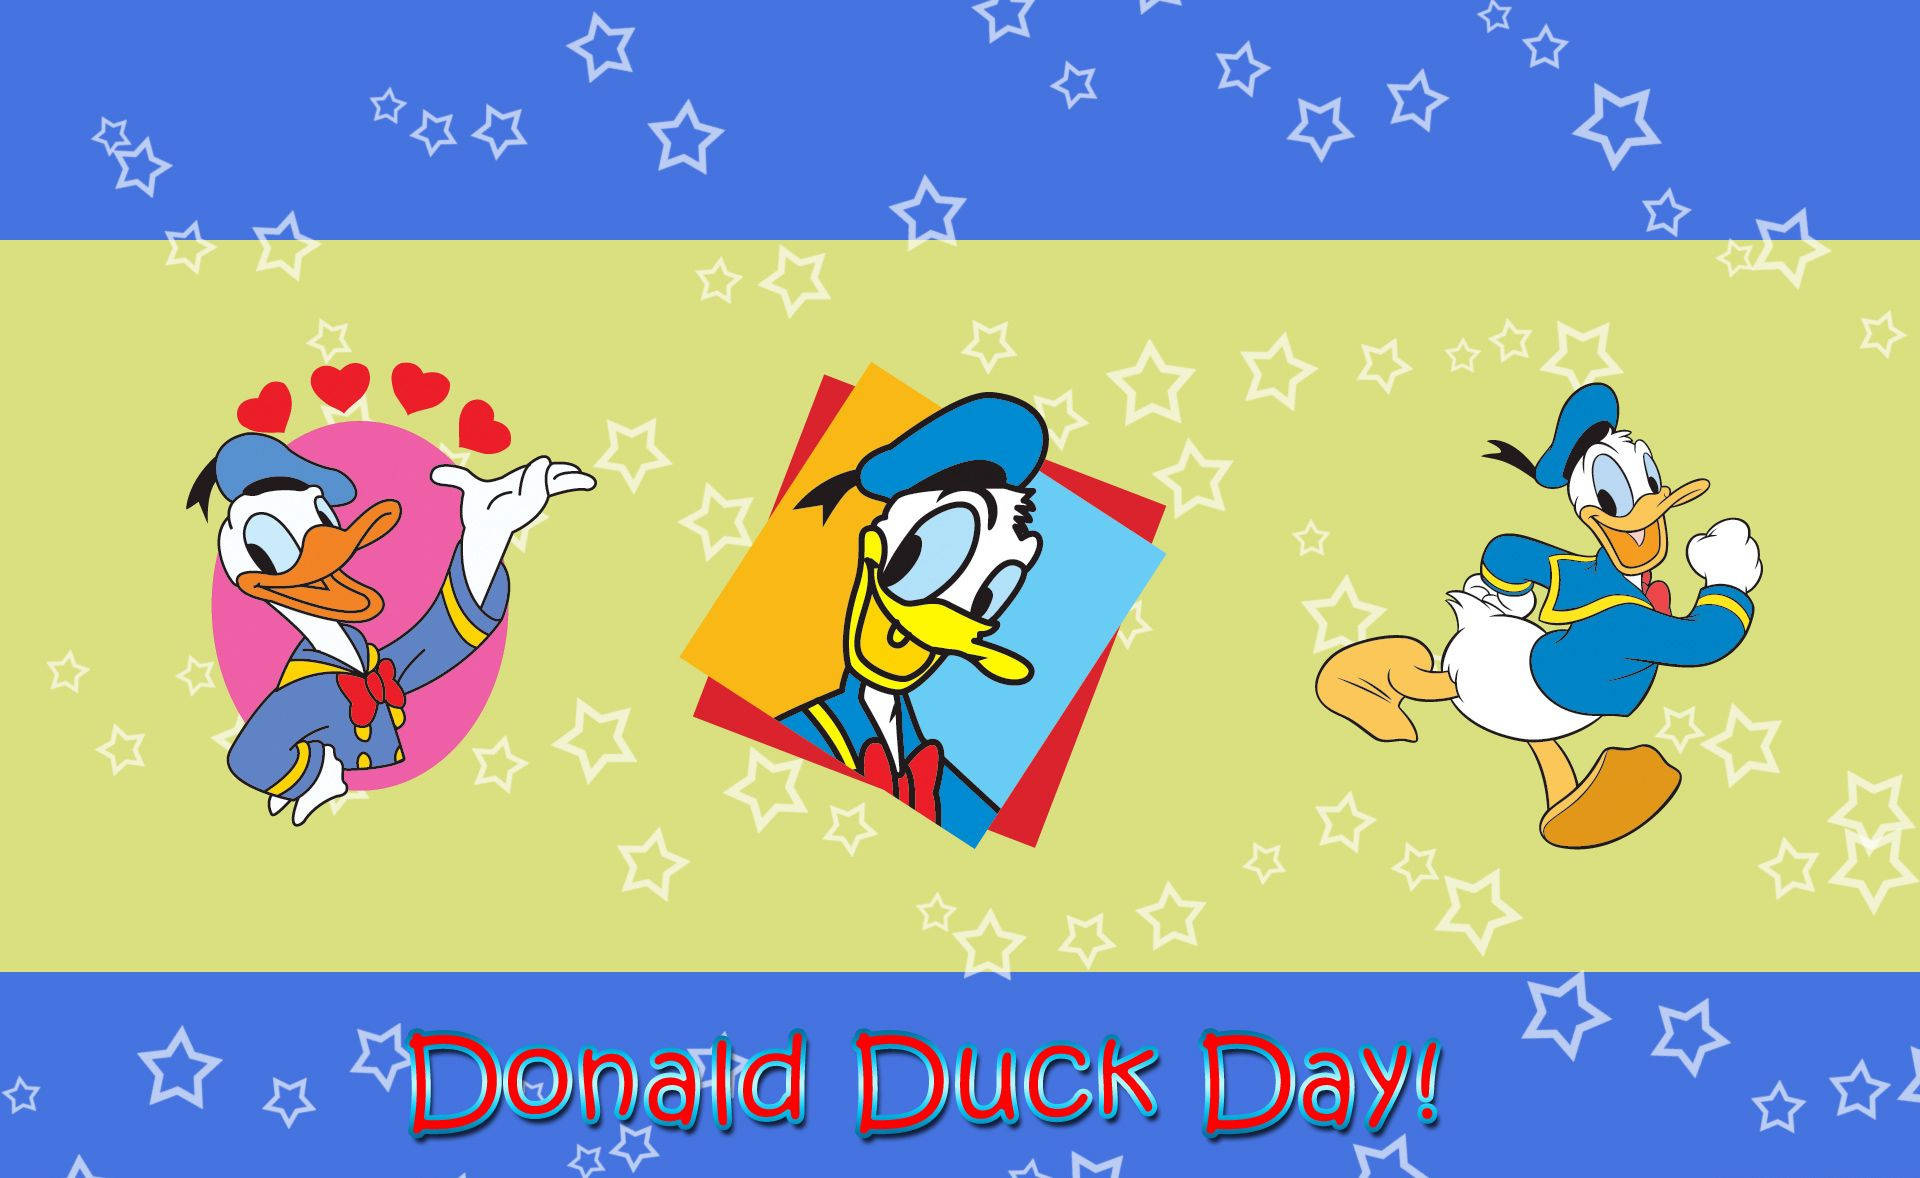 Donald Duck Starry Illustration Wallpaper